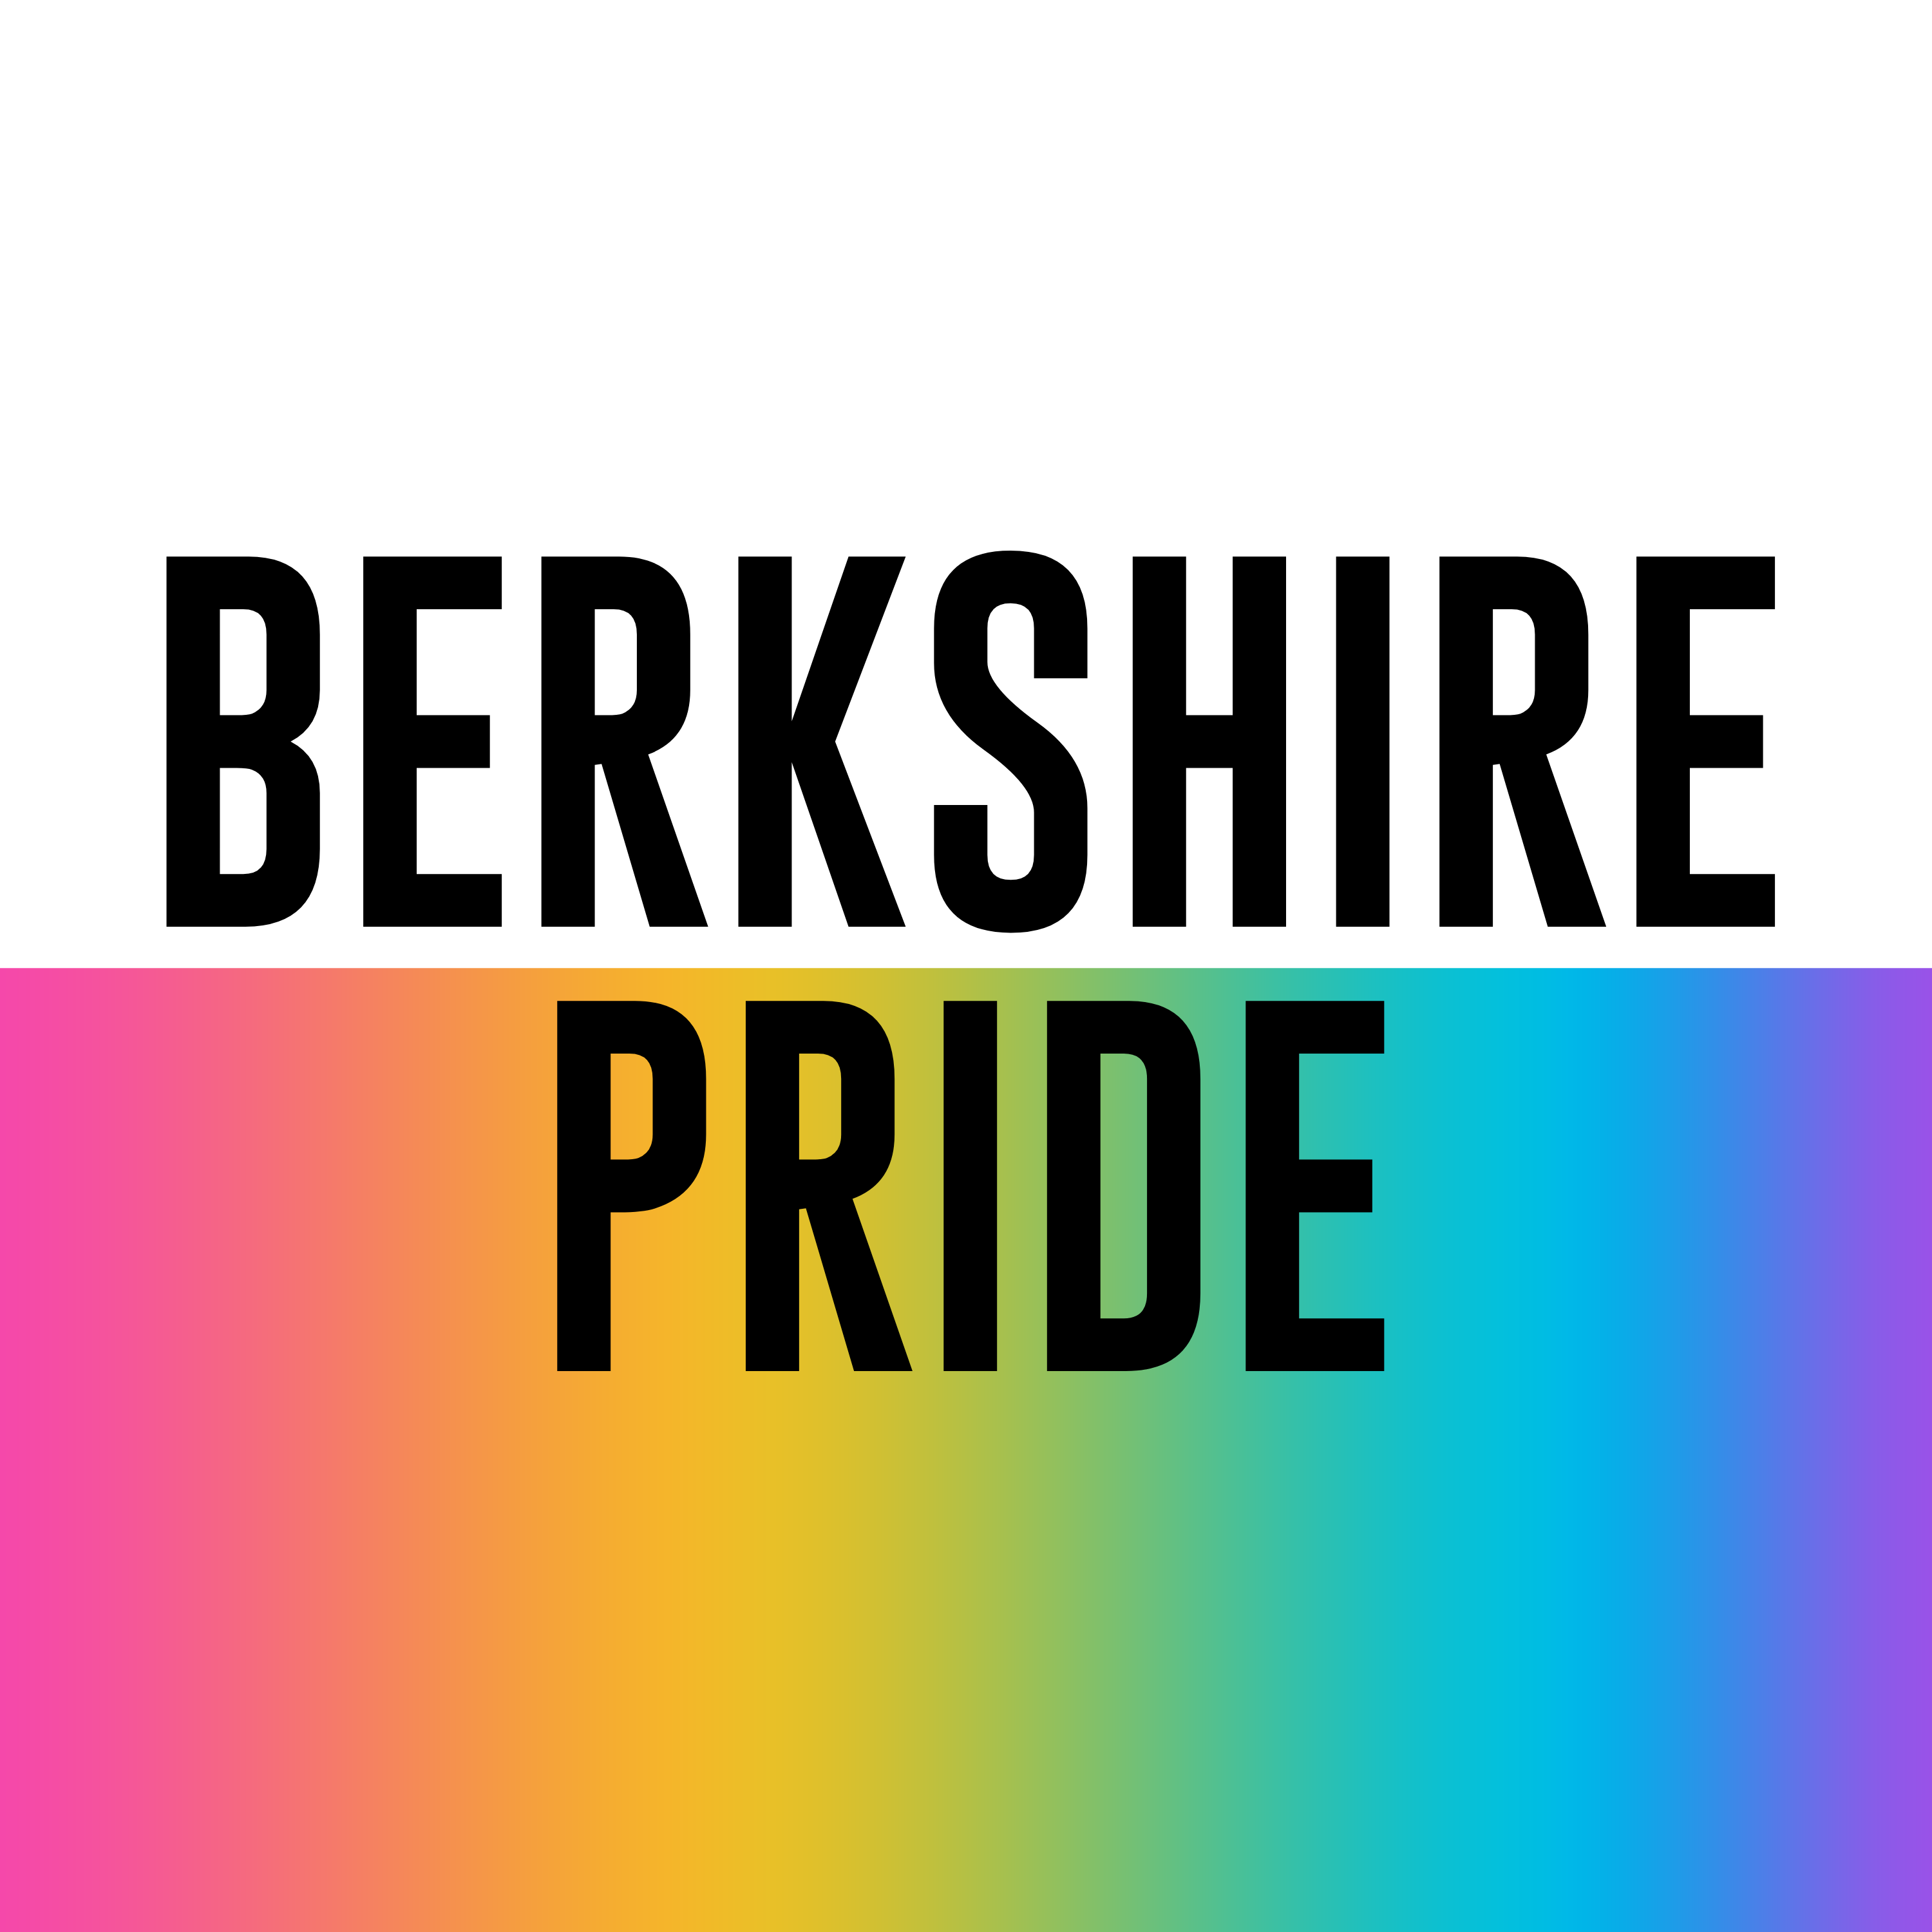 Berkshire Pride